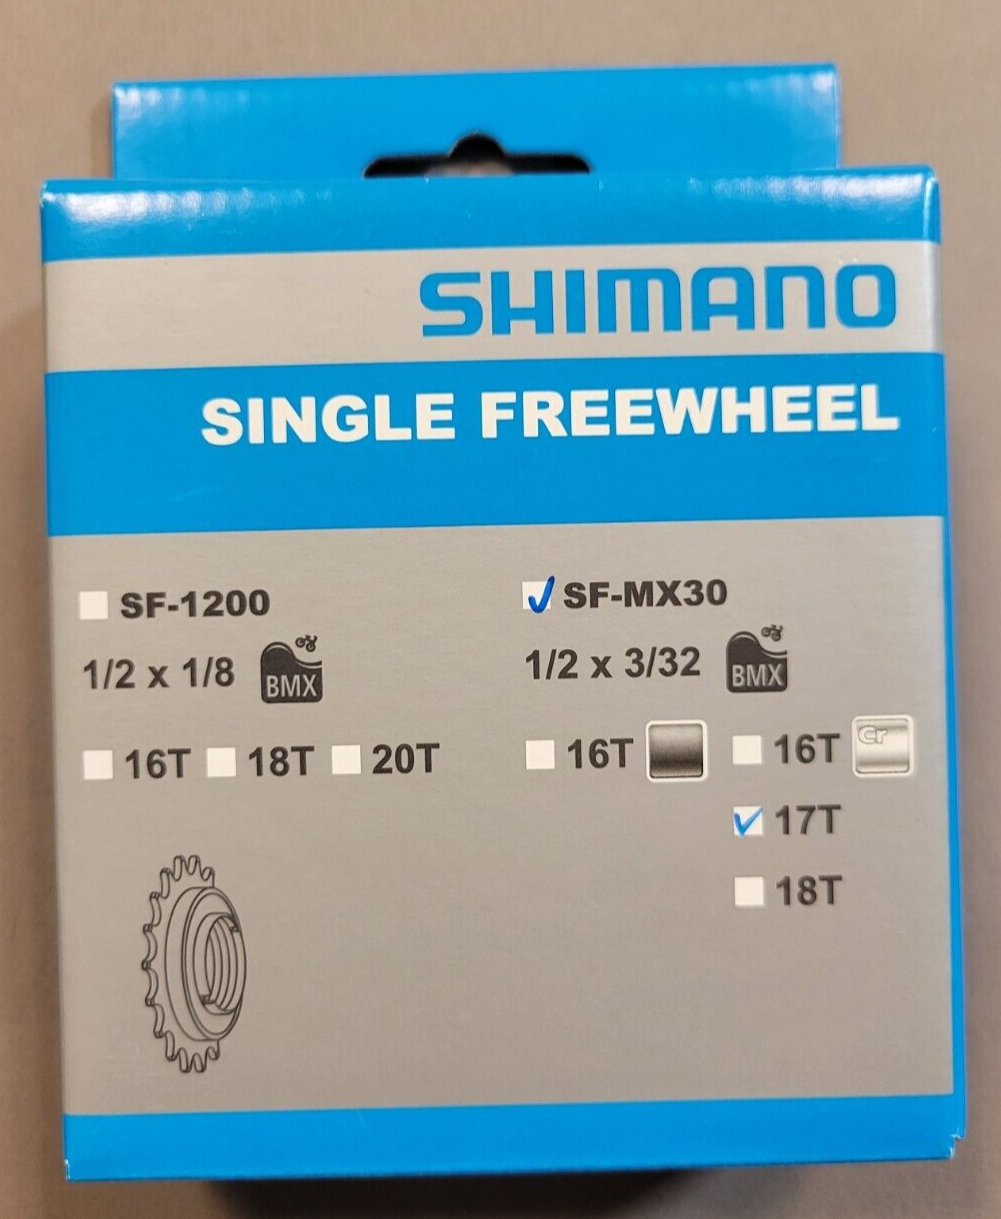 SF-MX30 Shimano 17 tooth single speed freewheel